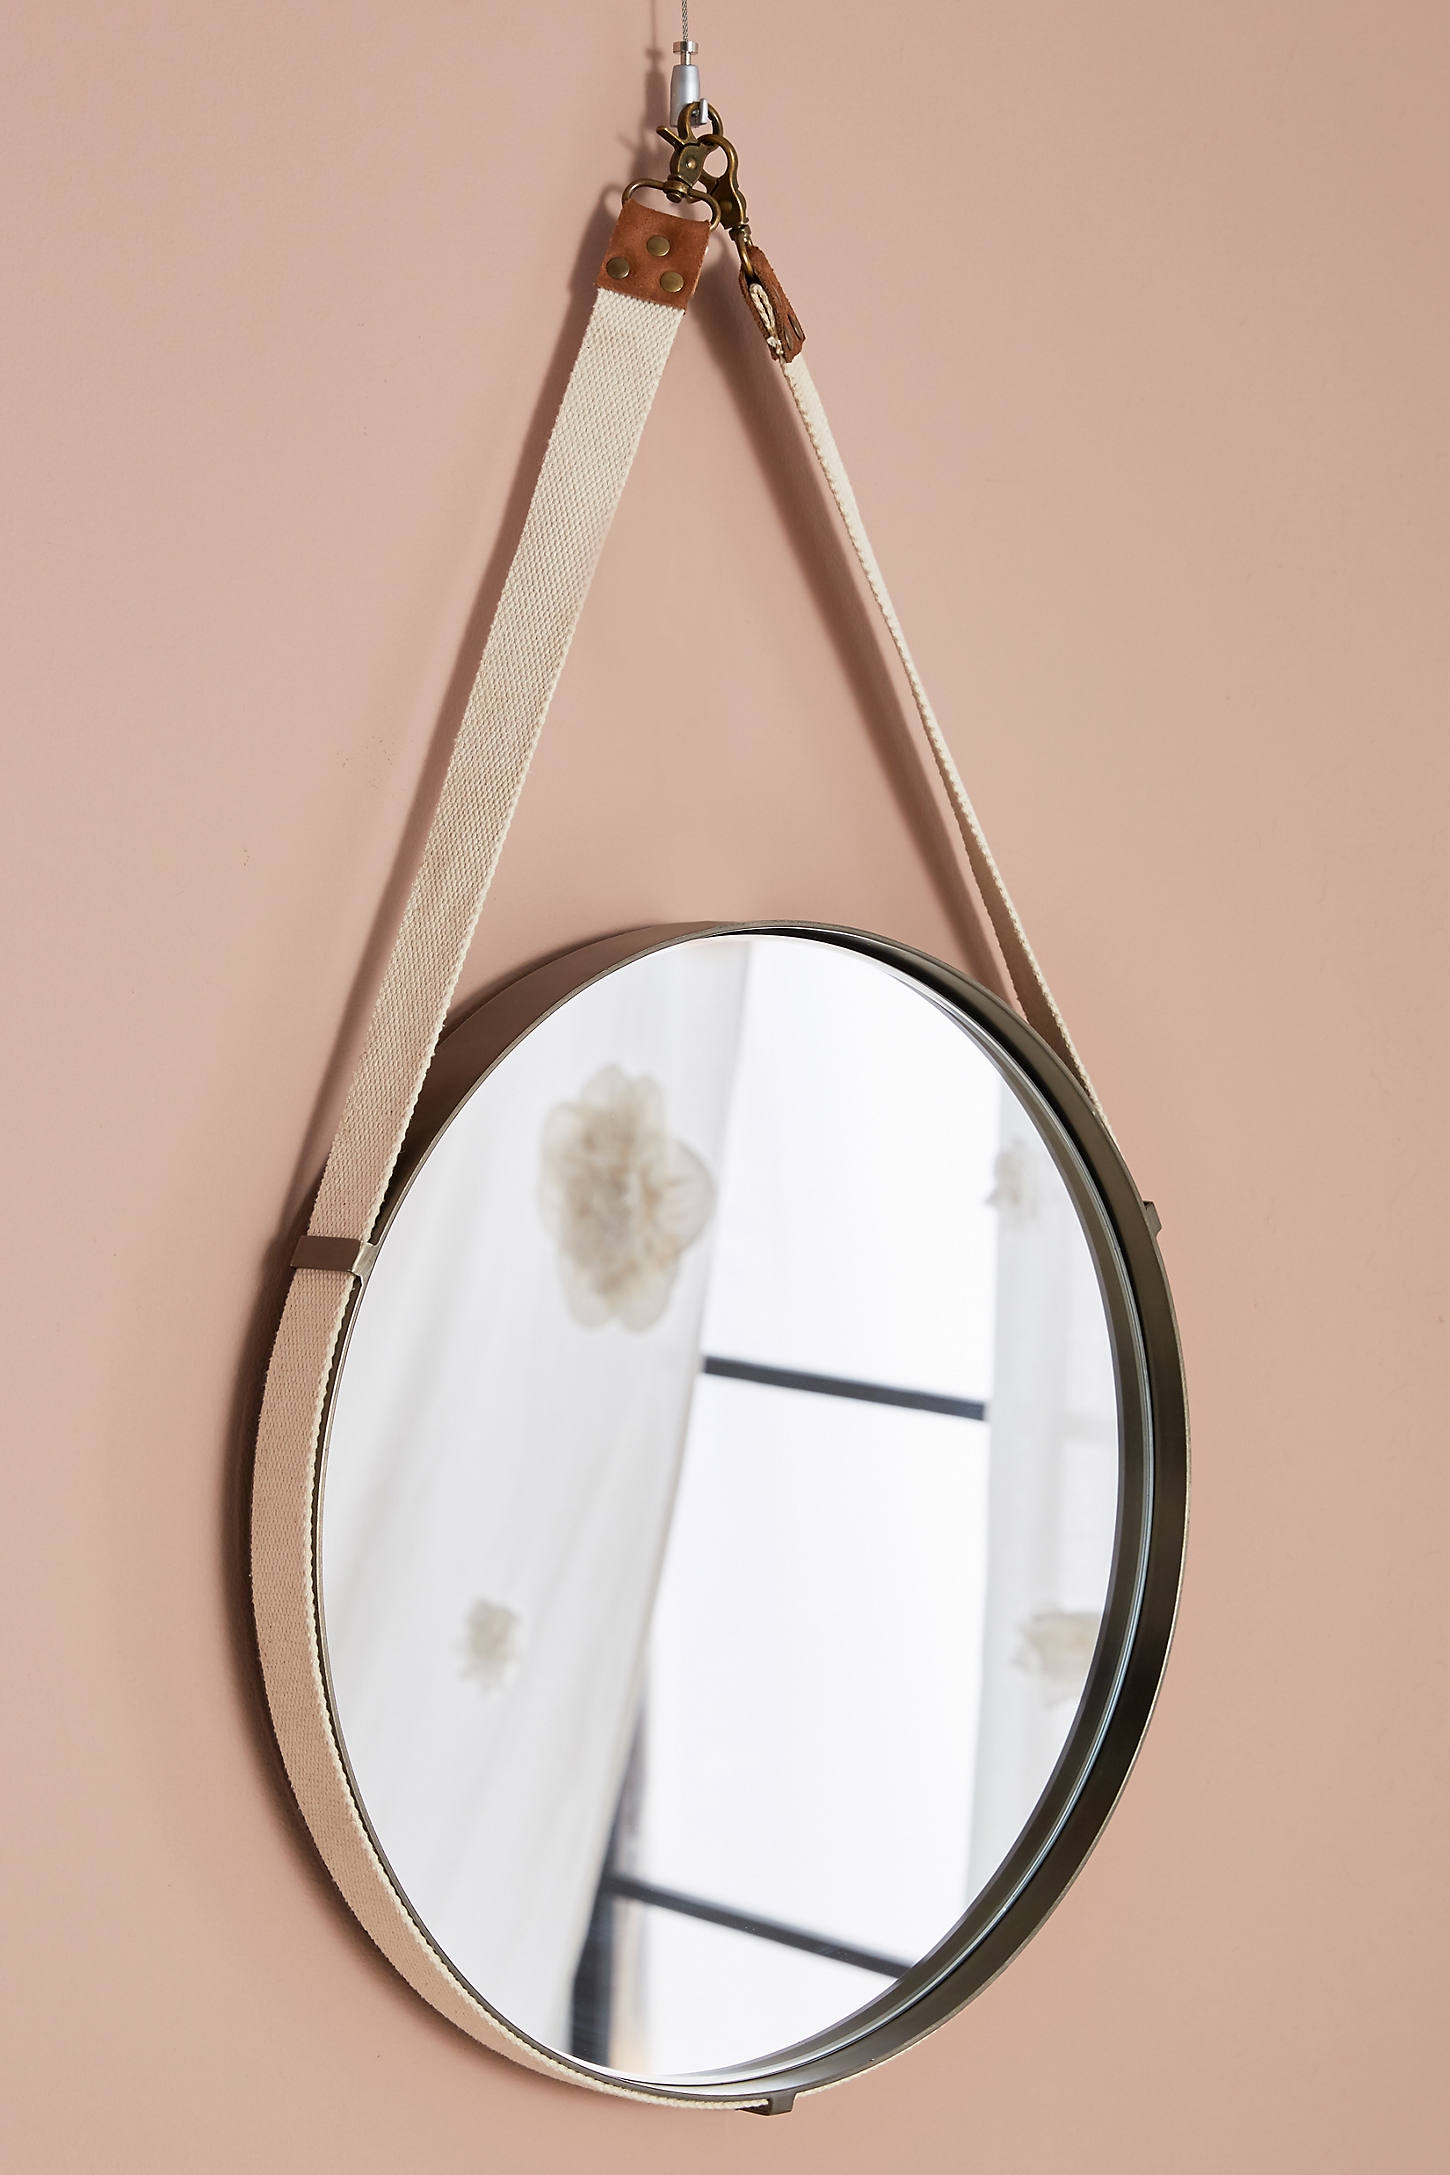 Sailor's Mirror - Image 0